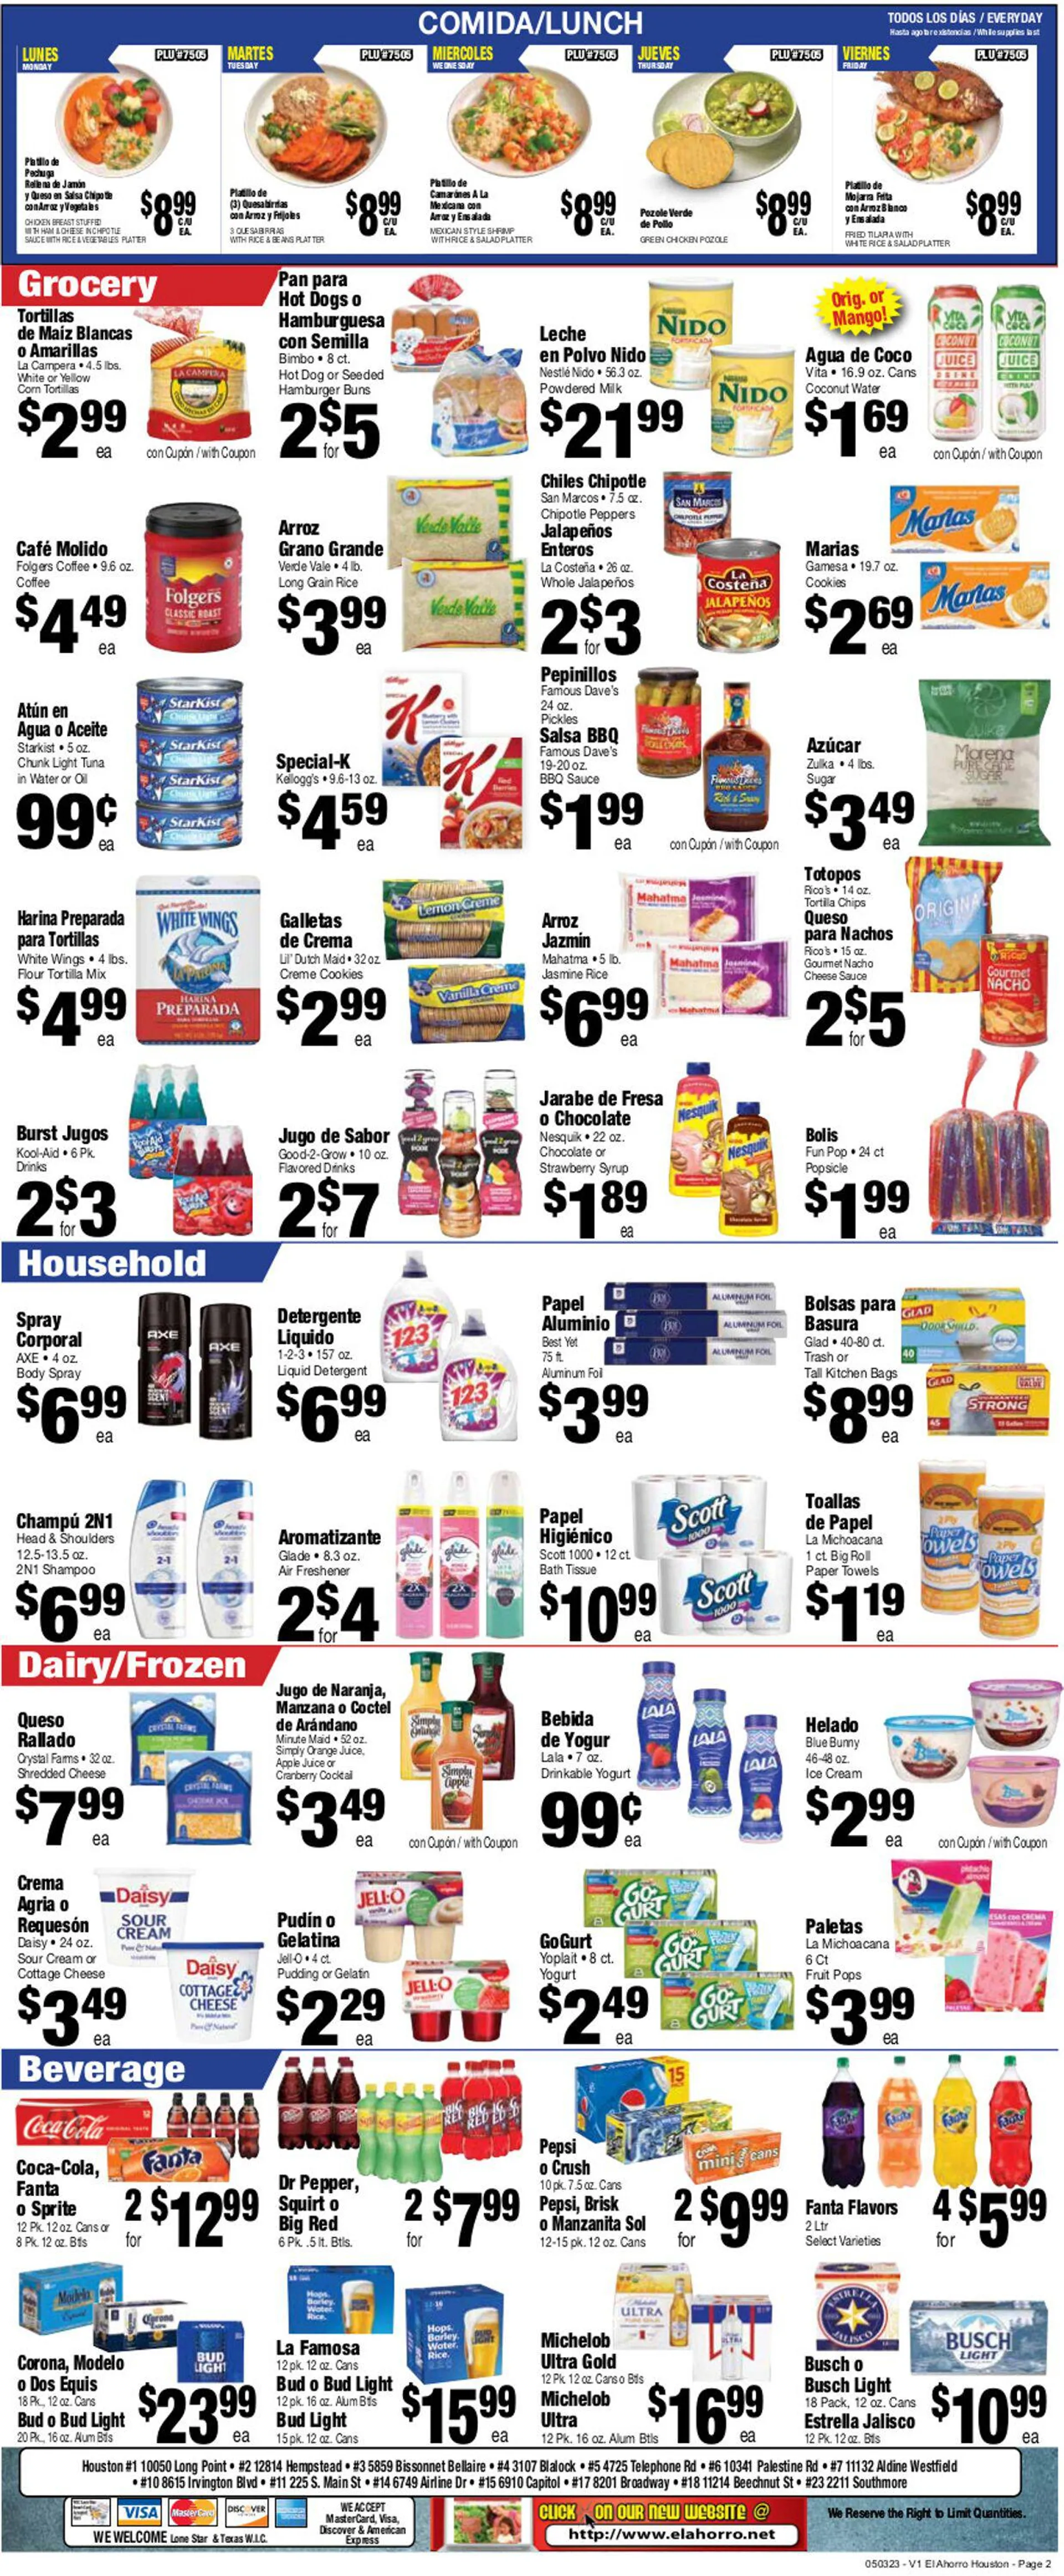 El Ahorro Supermarket Current weekly ad - 2